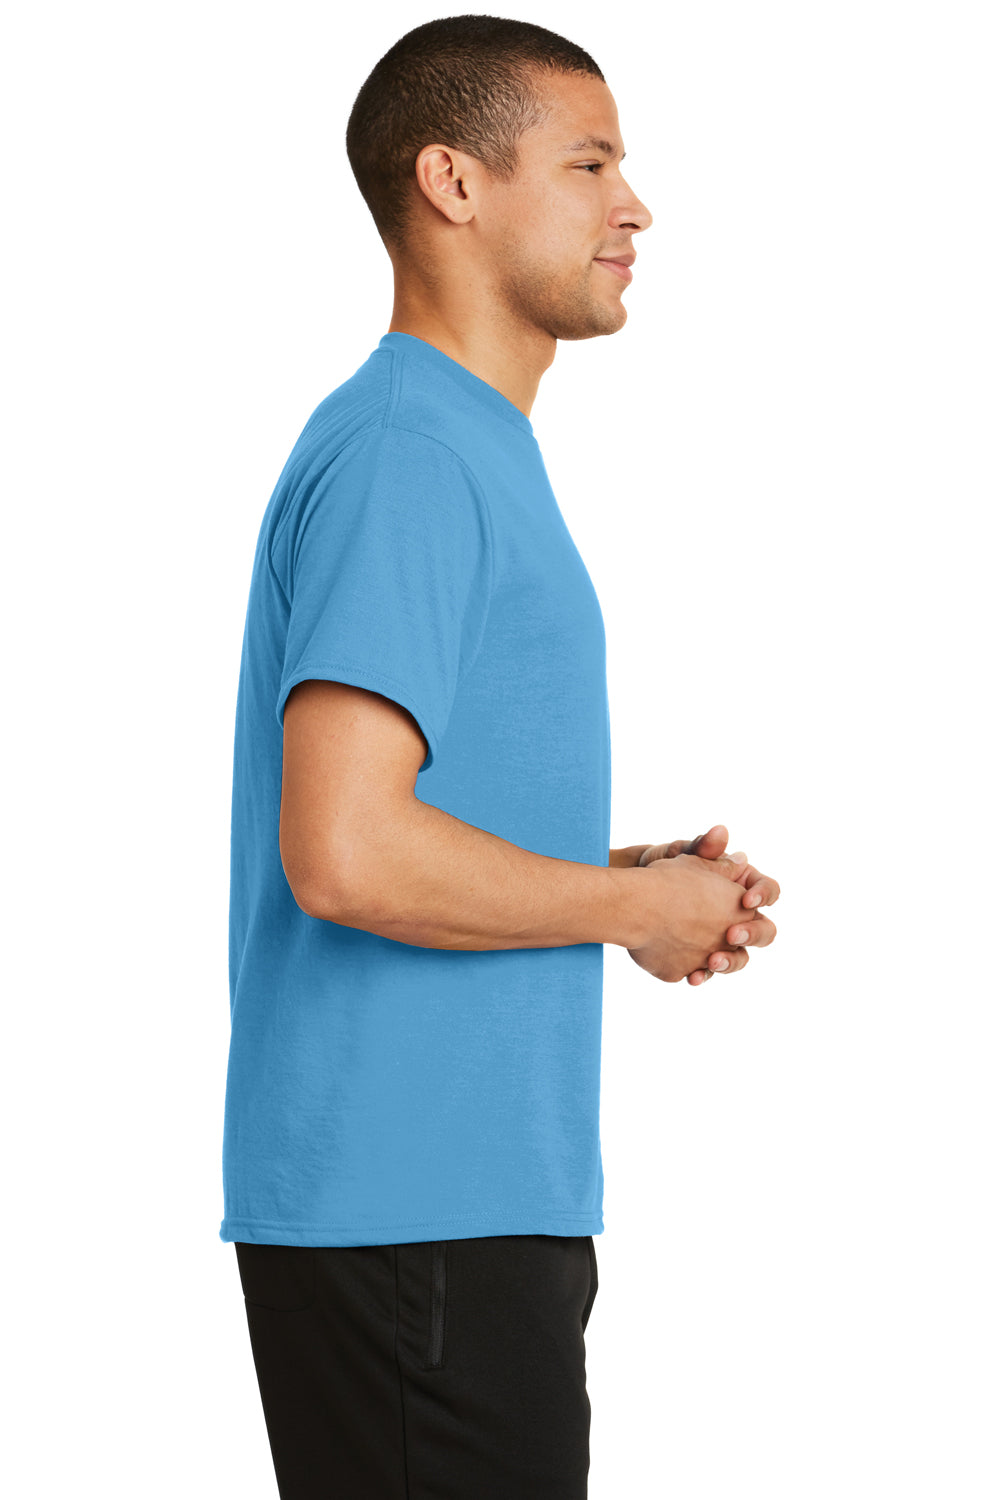 Port & Company PC381 Mens Dry Zone Performance Moisture Wicking Short Sleeve Crewneck T-Shirt Aqua Blue Side